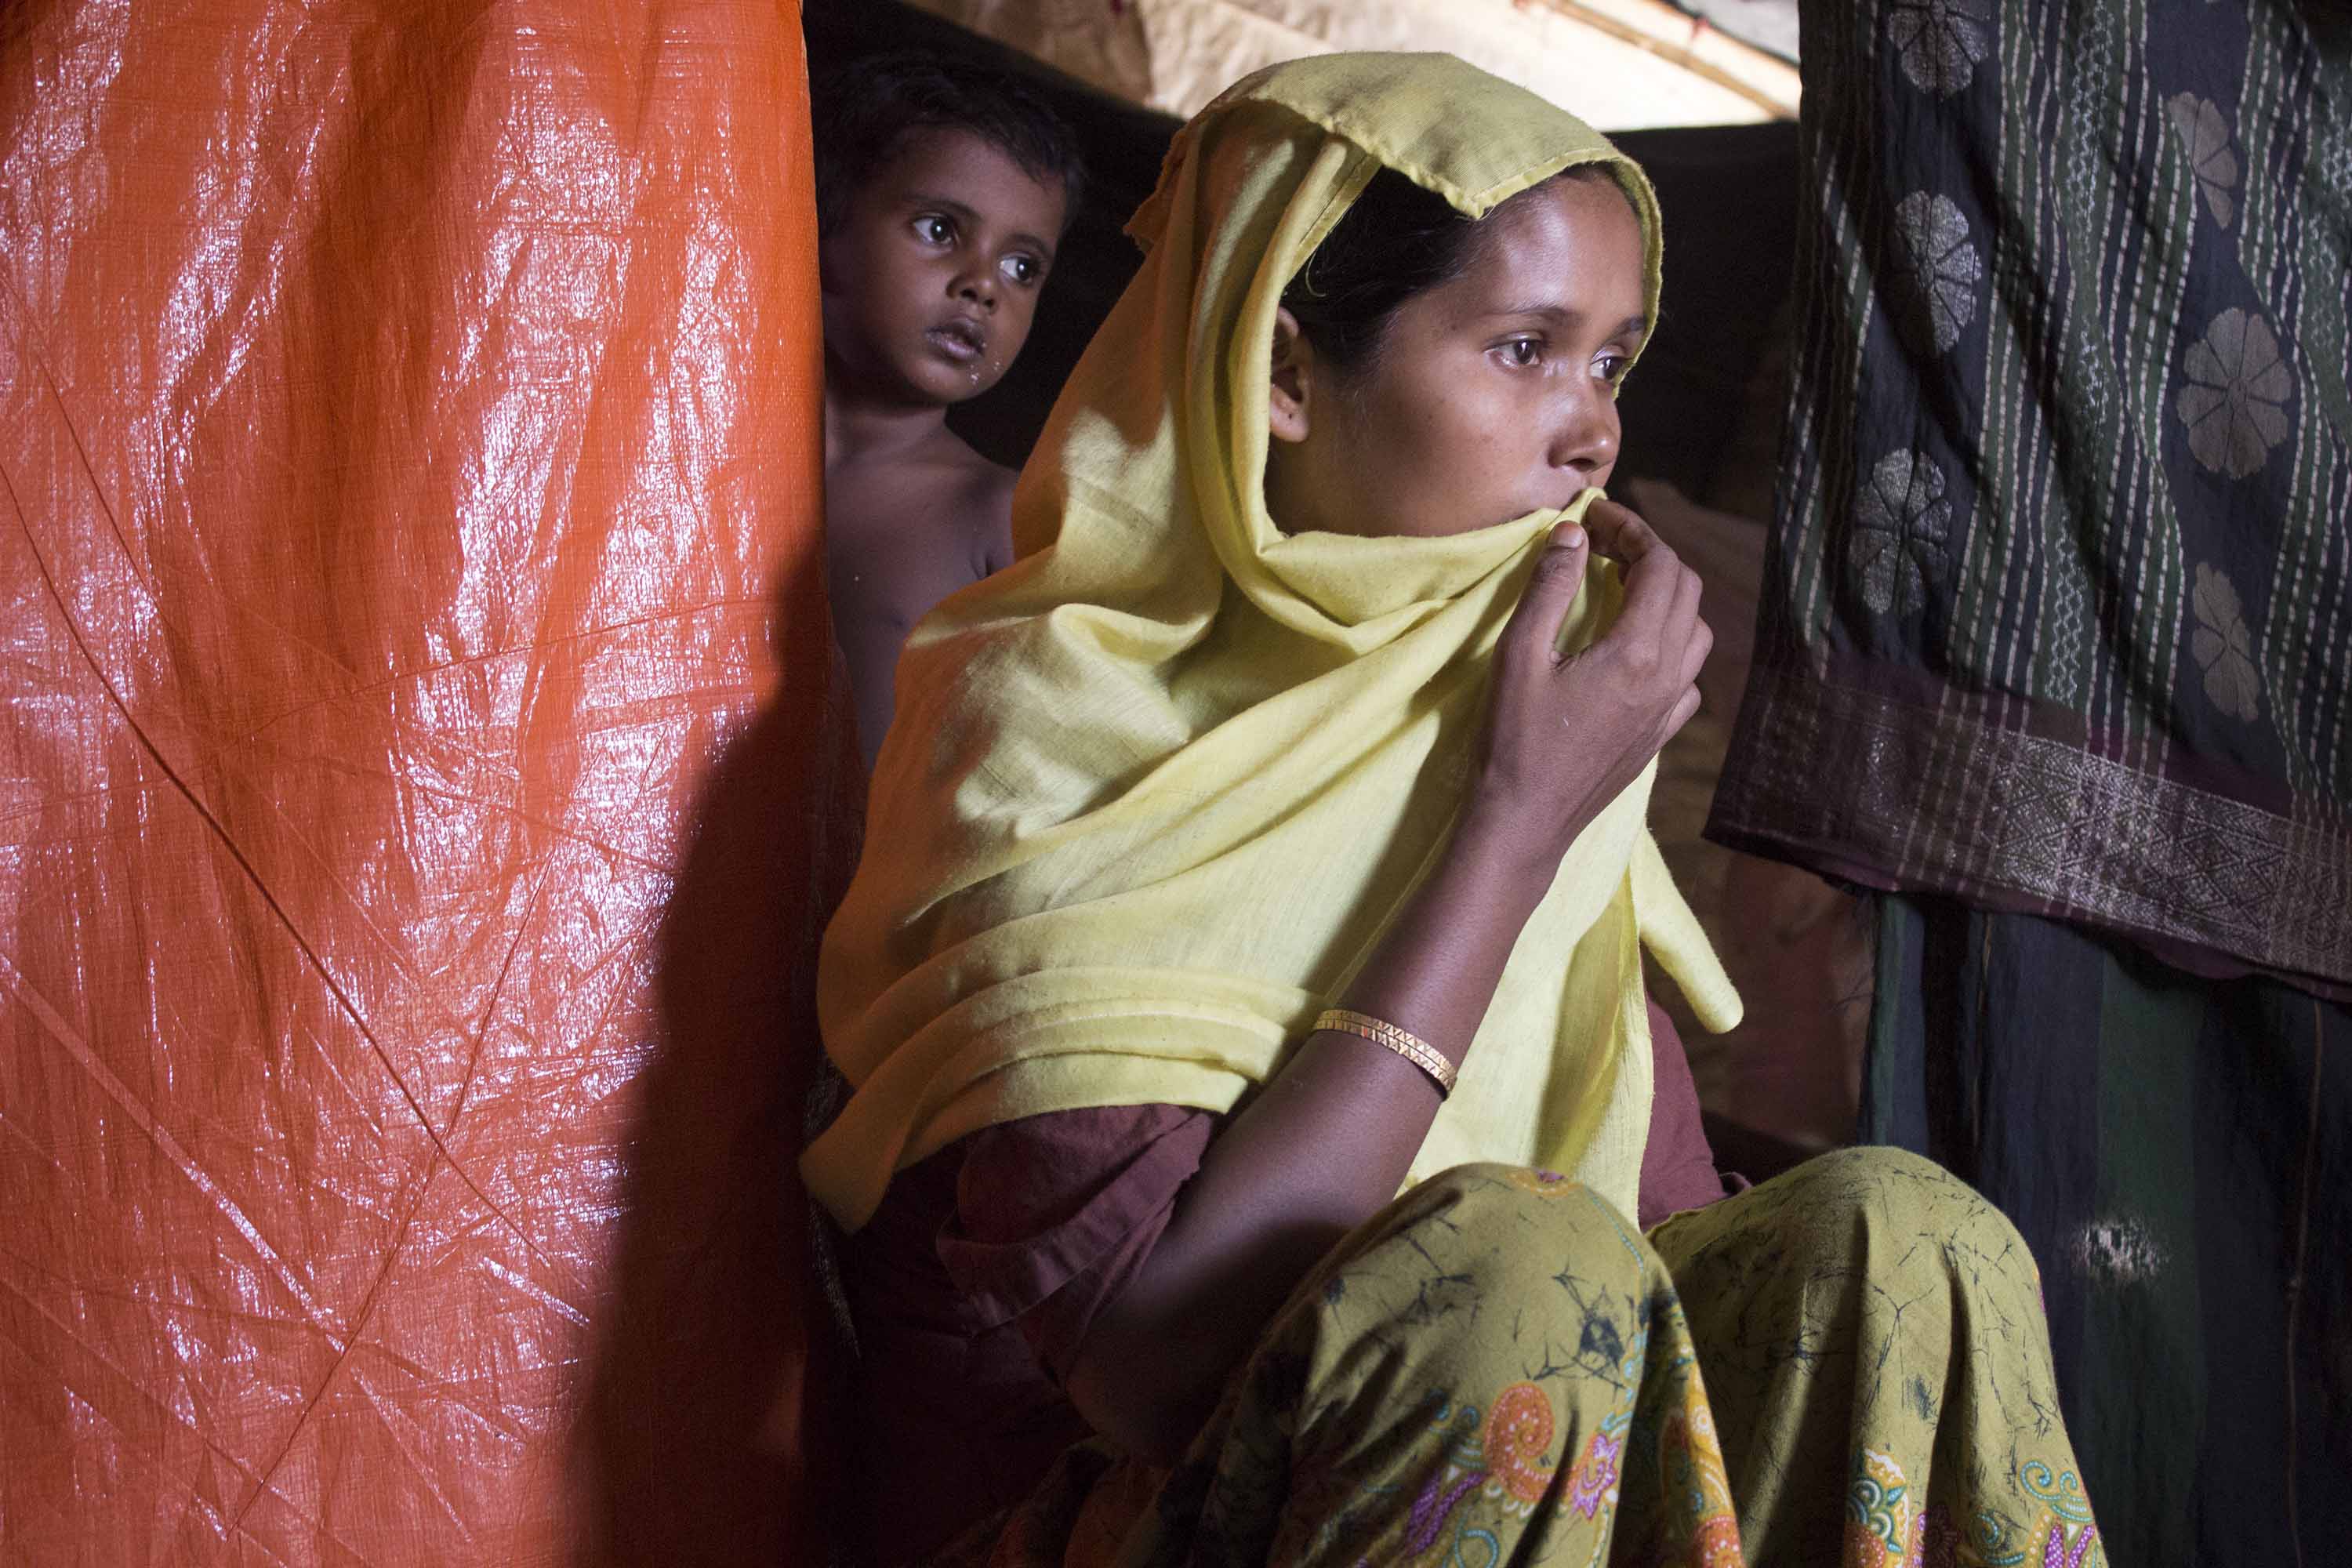 Bangla Mom Rape Hd Porn Video - Rape as weapon of war on Rohingya women | CNN